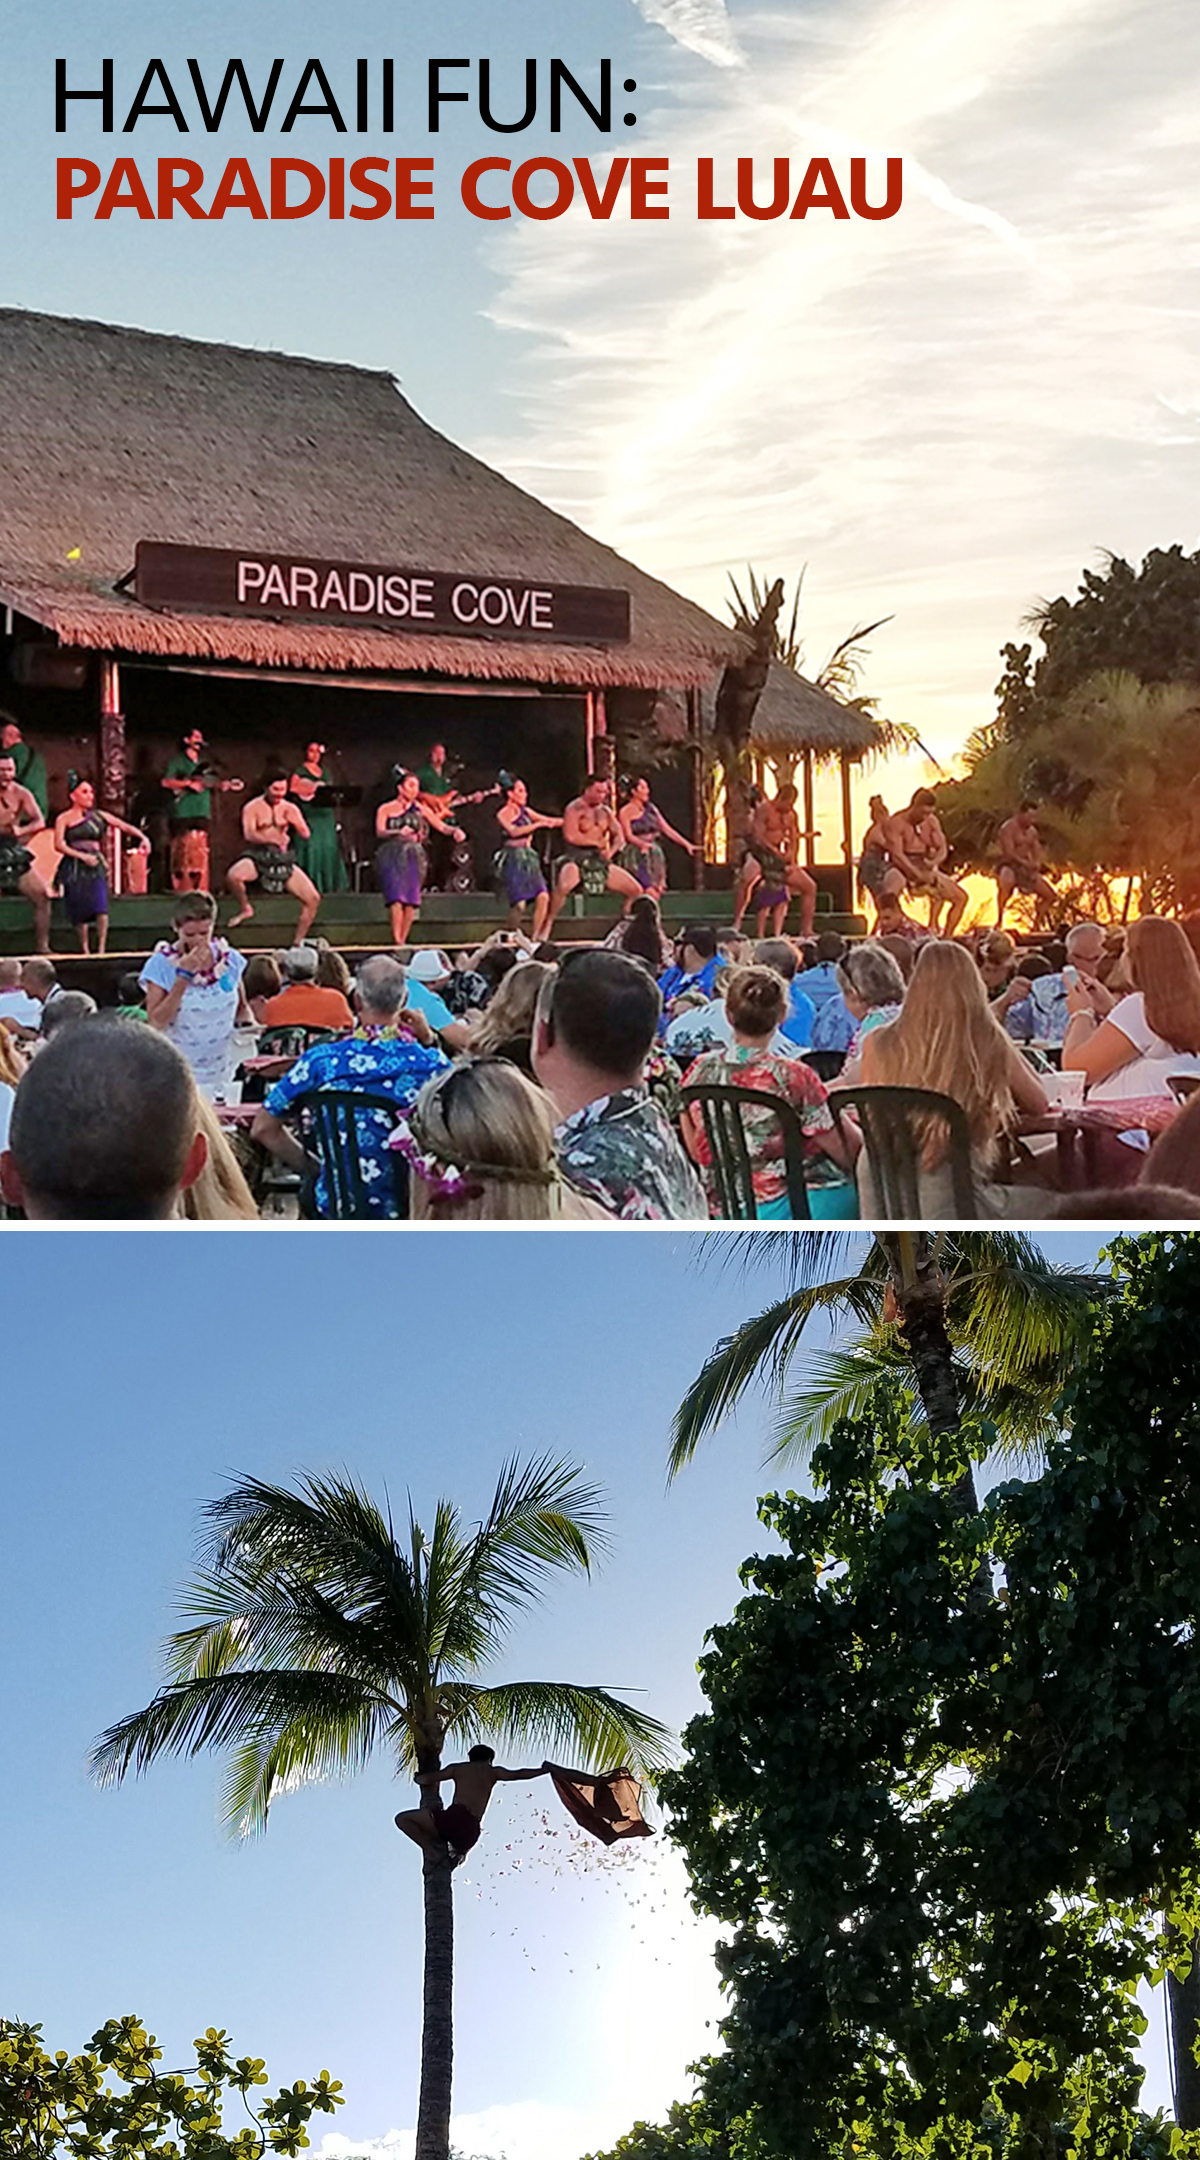 Hawaii Fun: Paradise Cove Luau